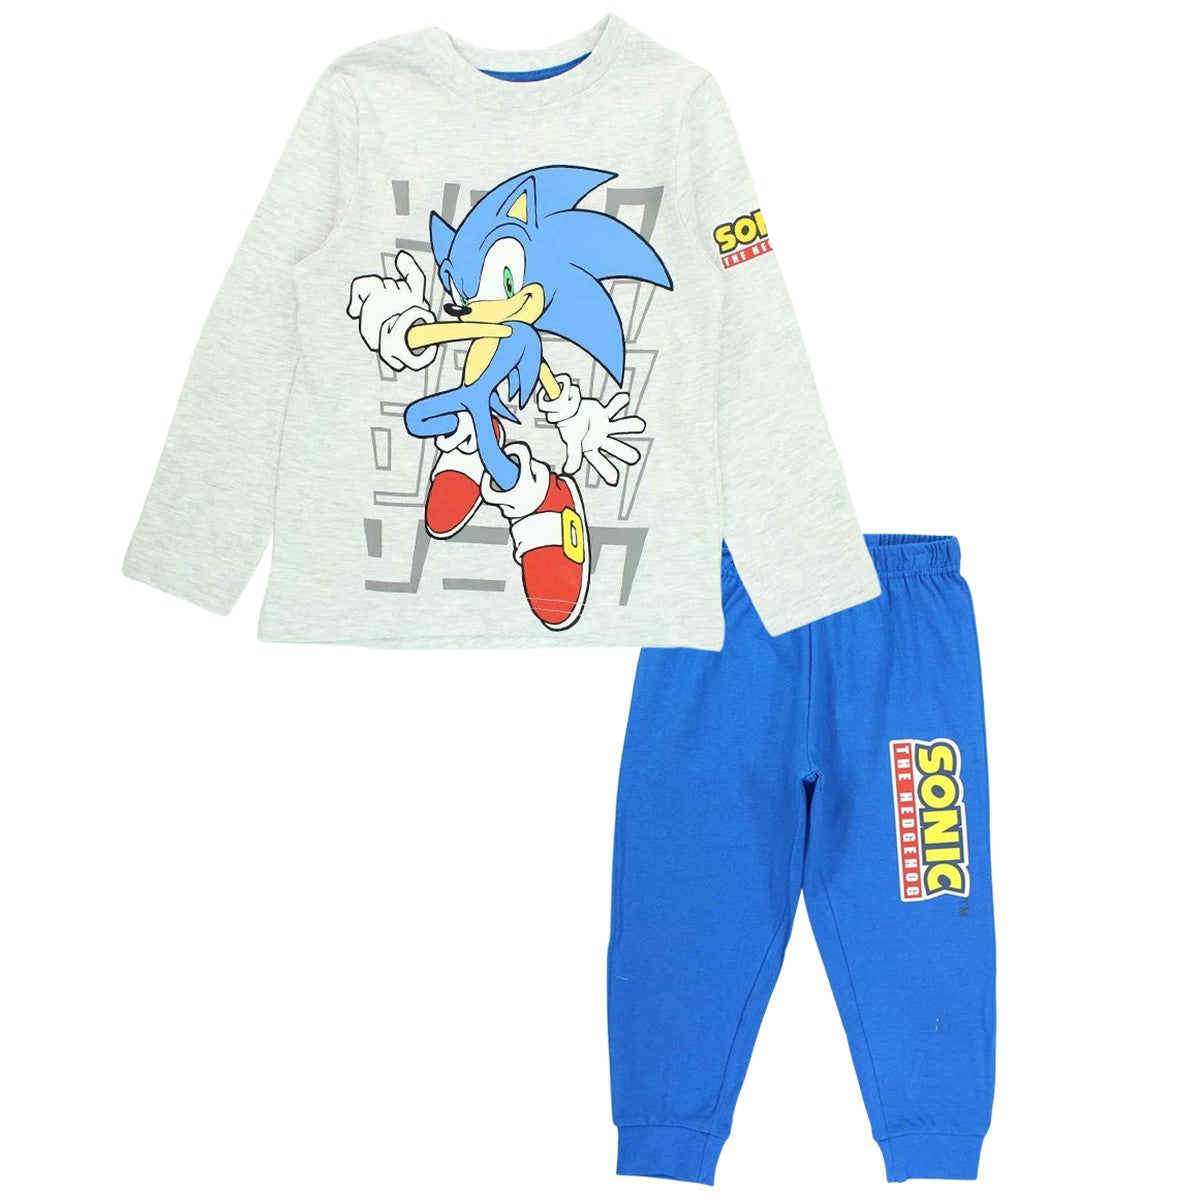 Sonic the Hedgehog pyjama